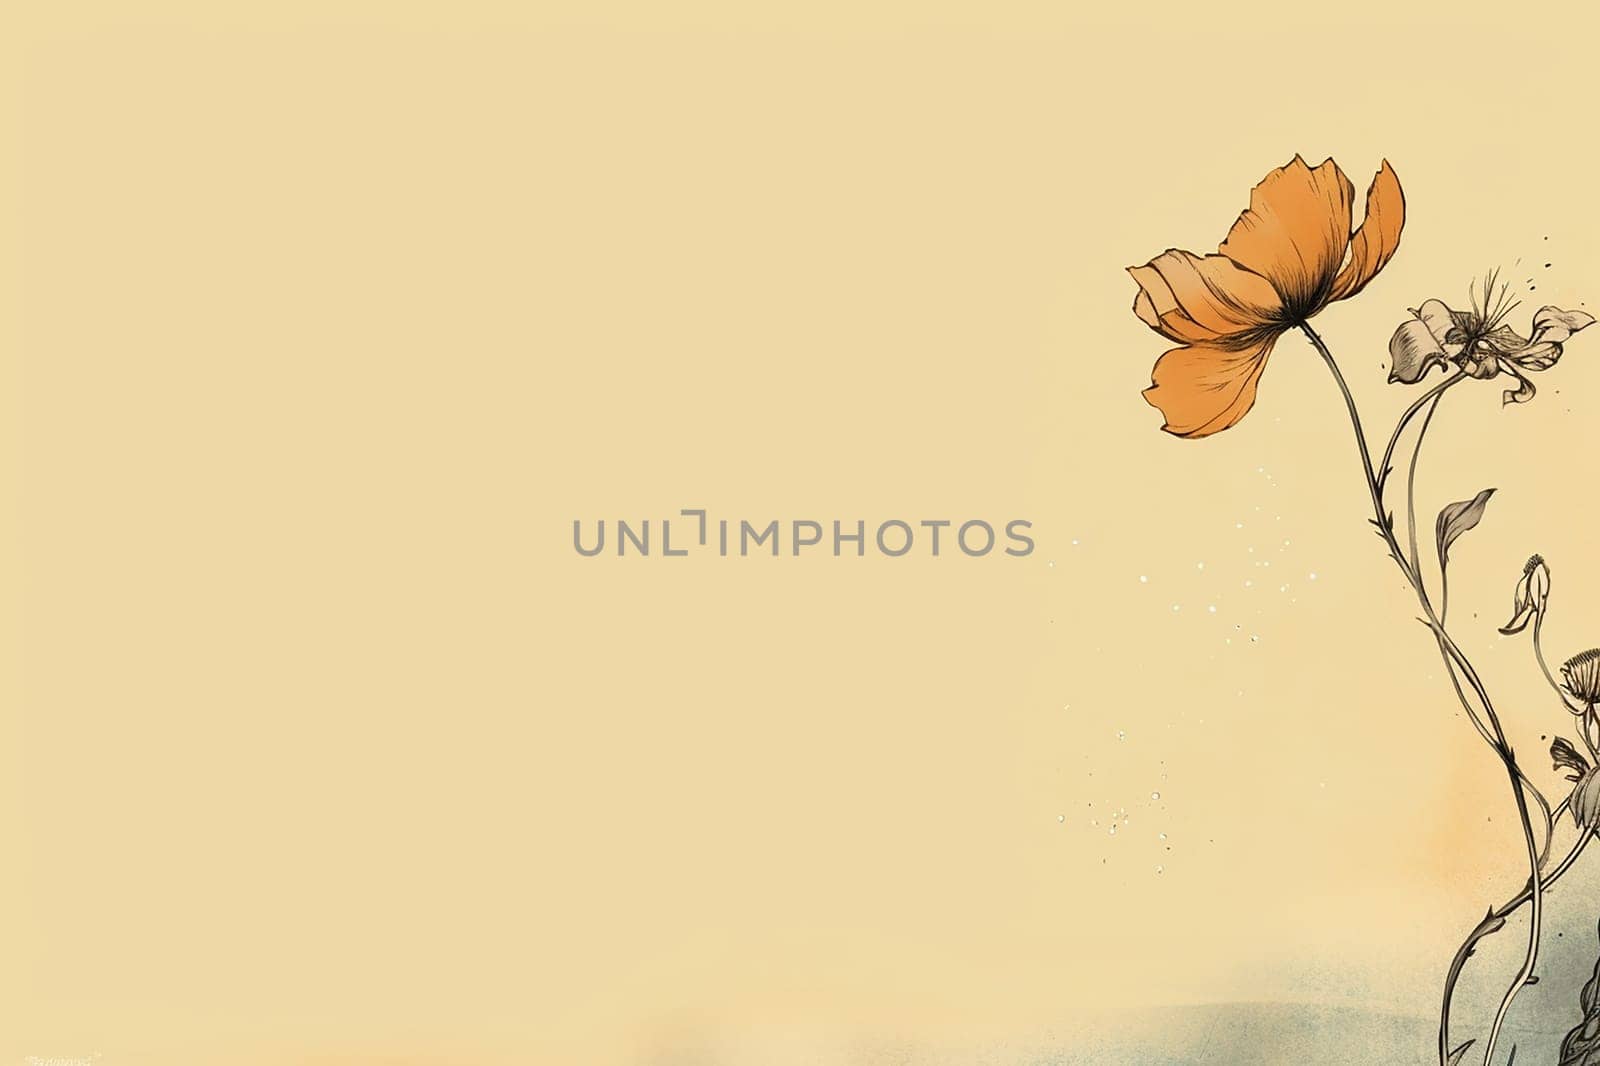 Elegant orange flower against a soft gradient background.